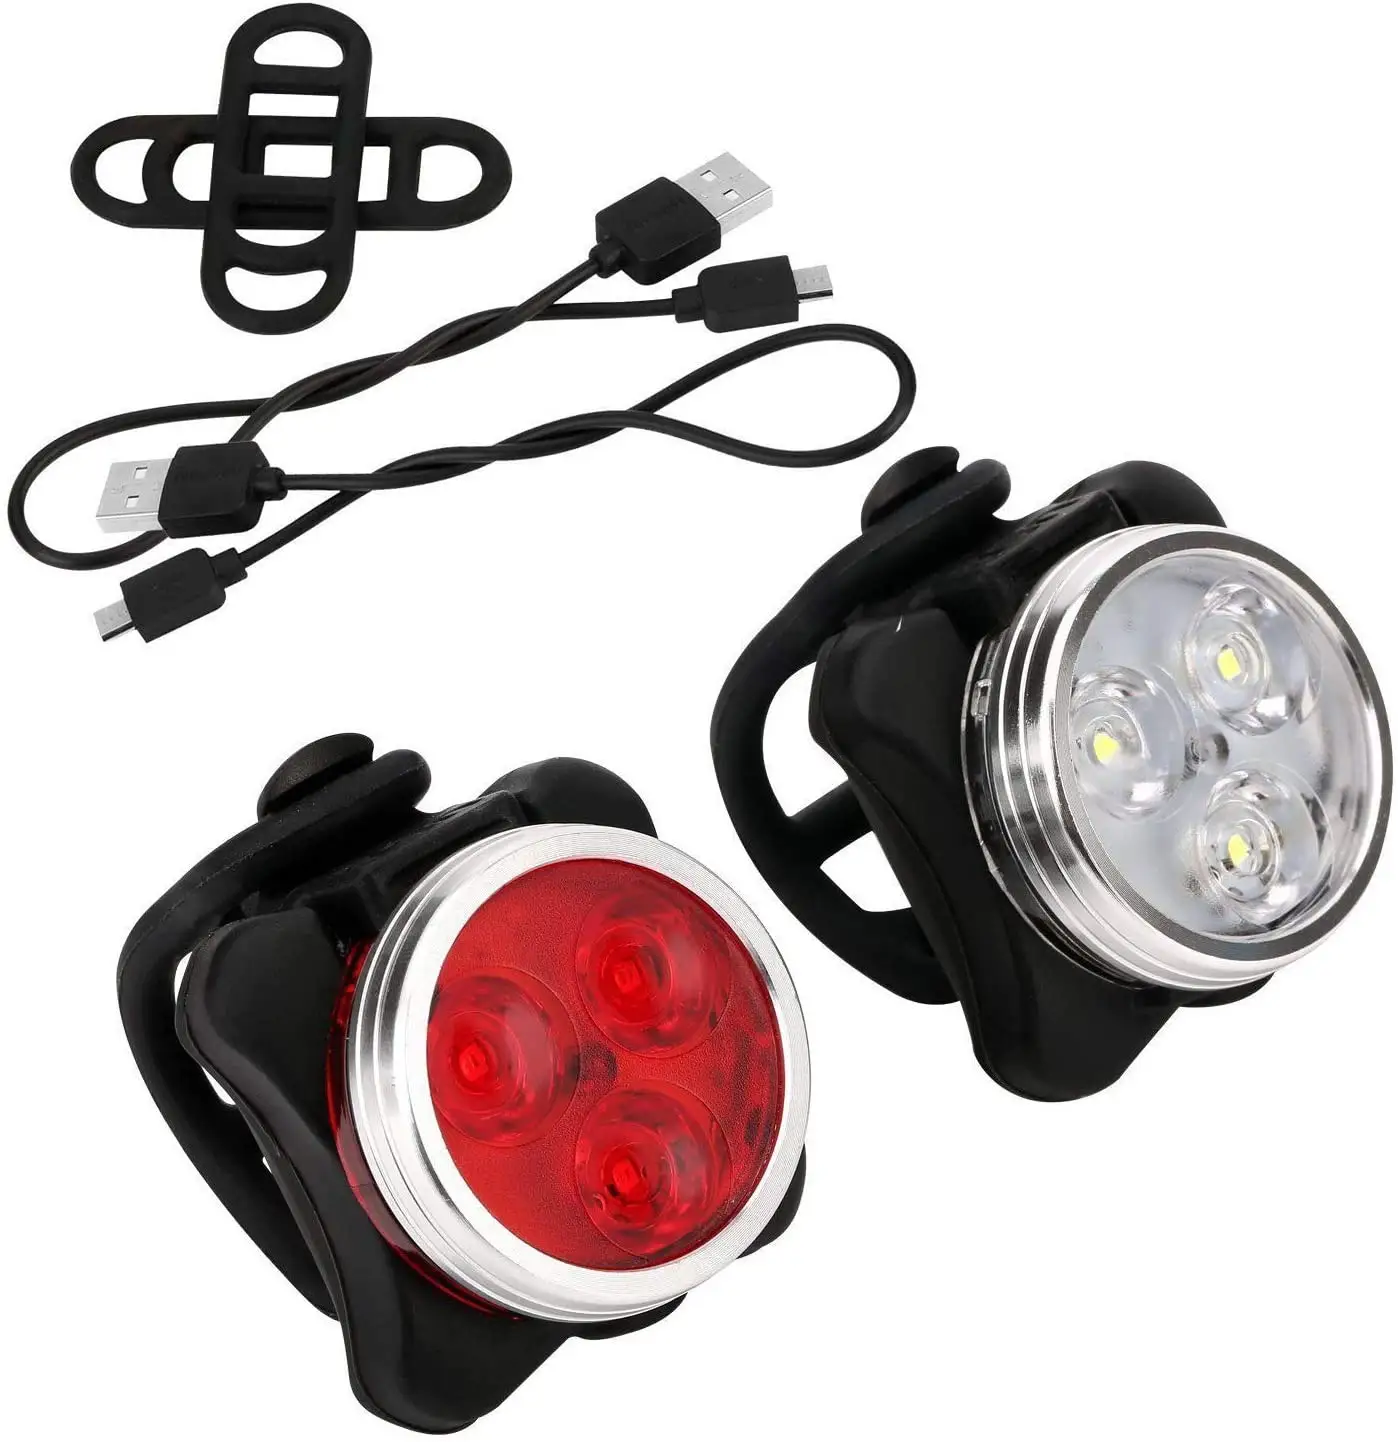 USB recargable frente de luz blanca de la bicicleta a prueba de agua 4 modos de bicicleta rojo LED cola LED luz conjunto